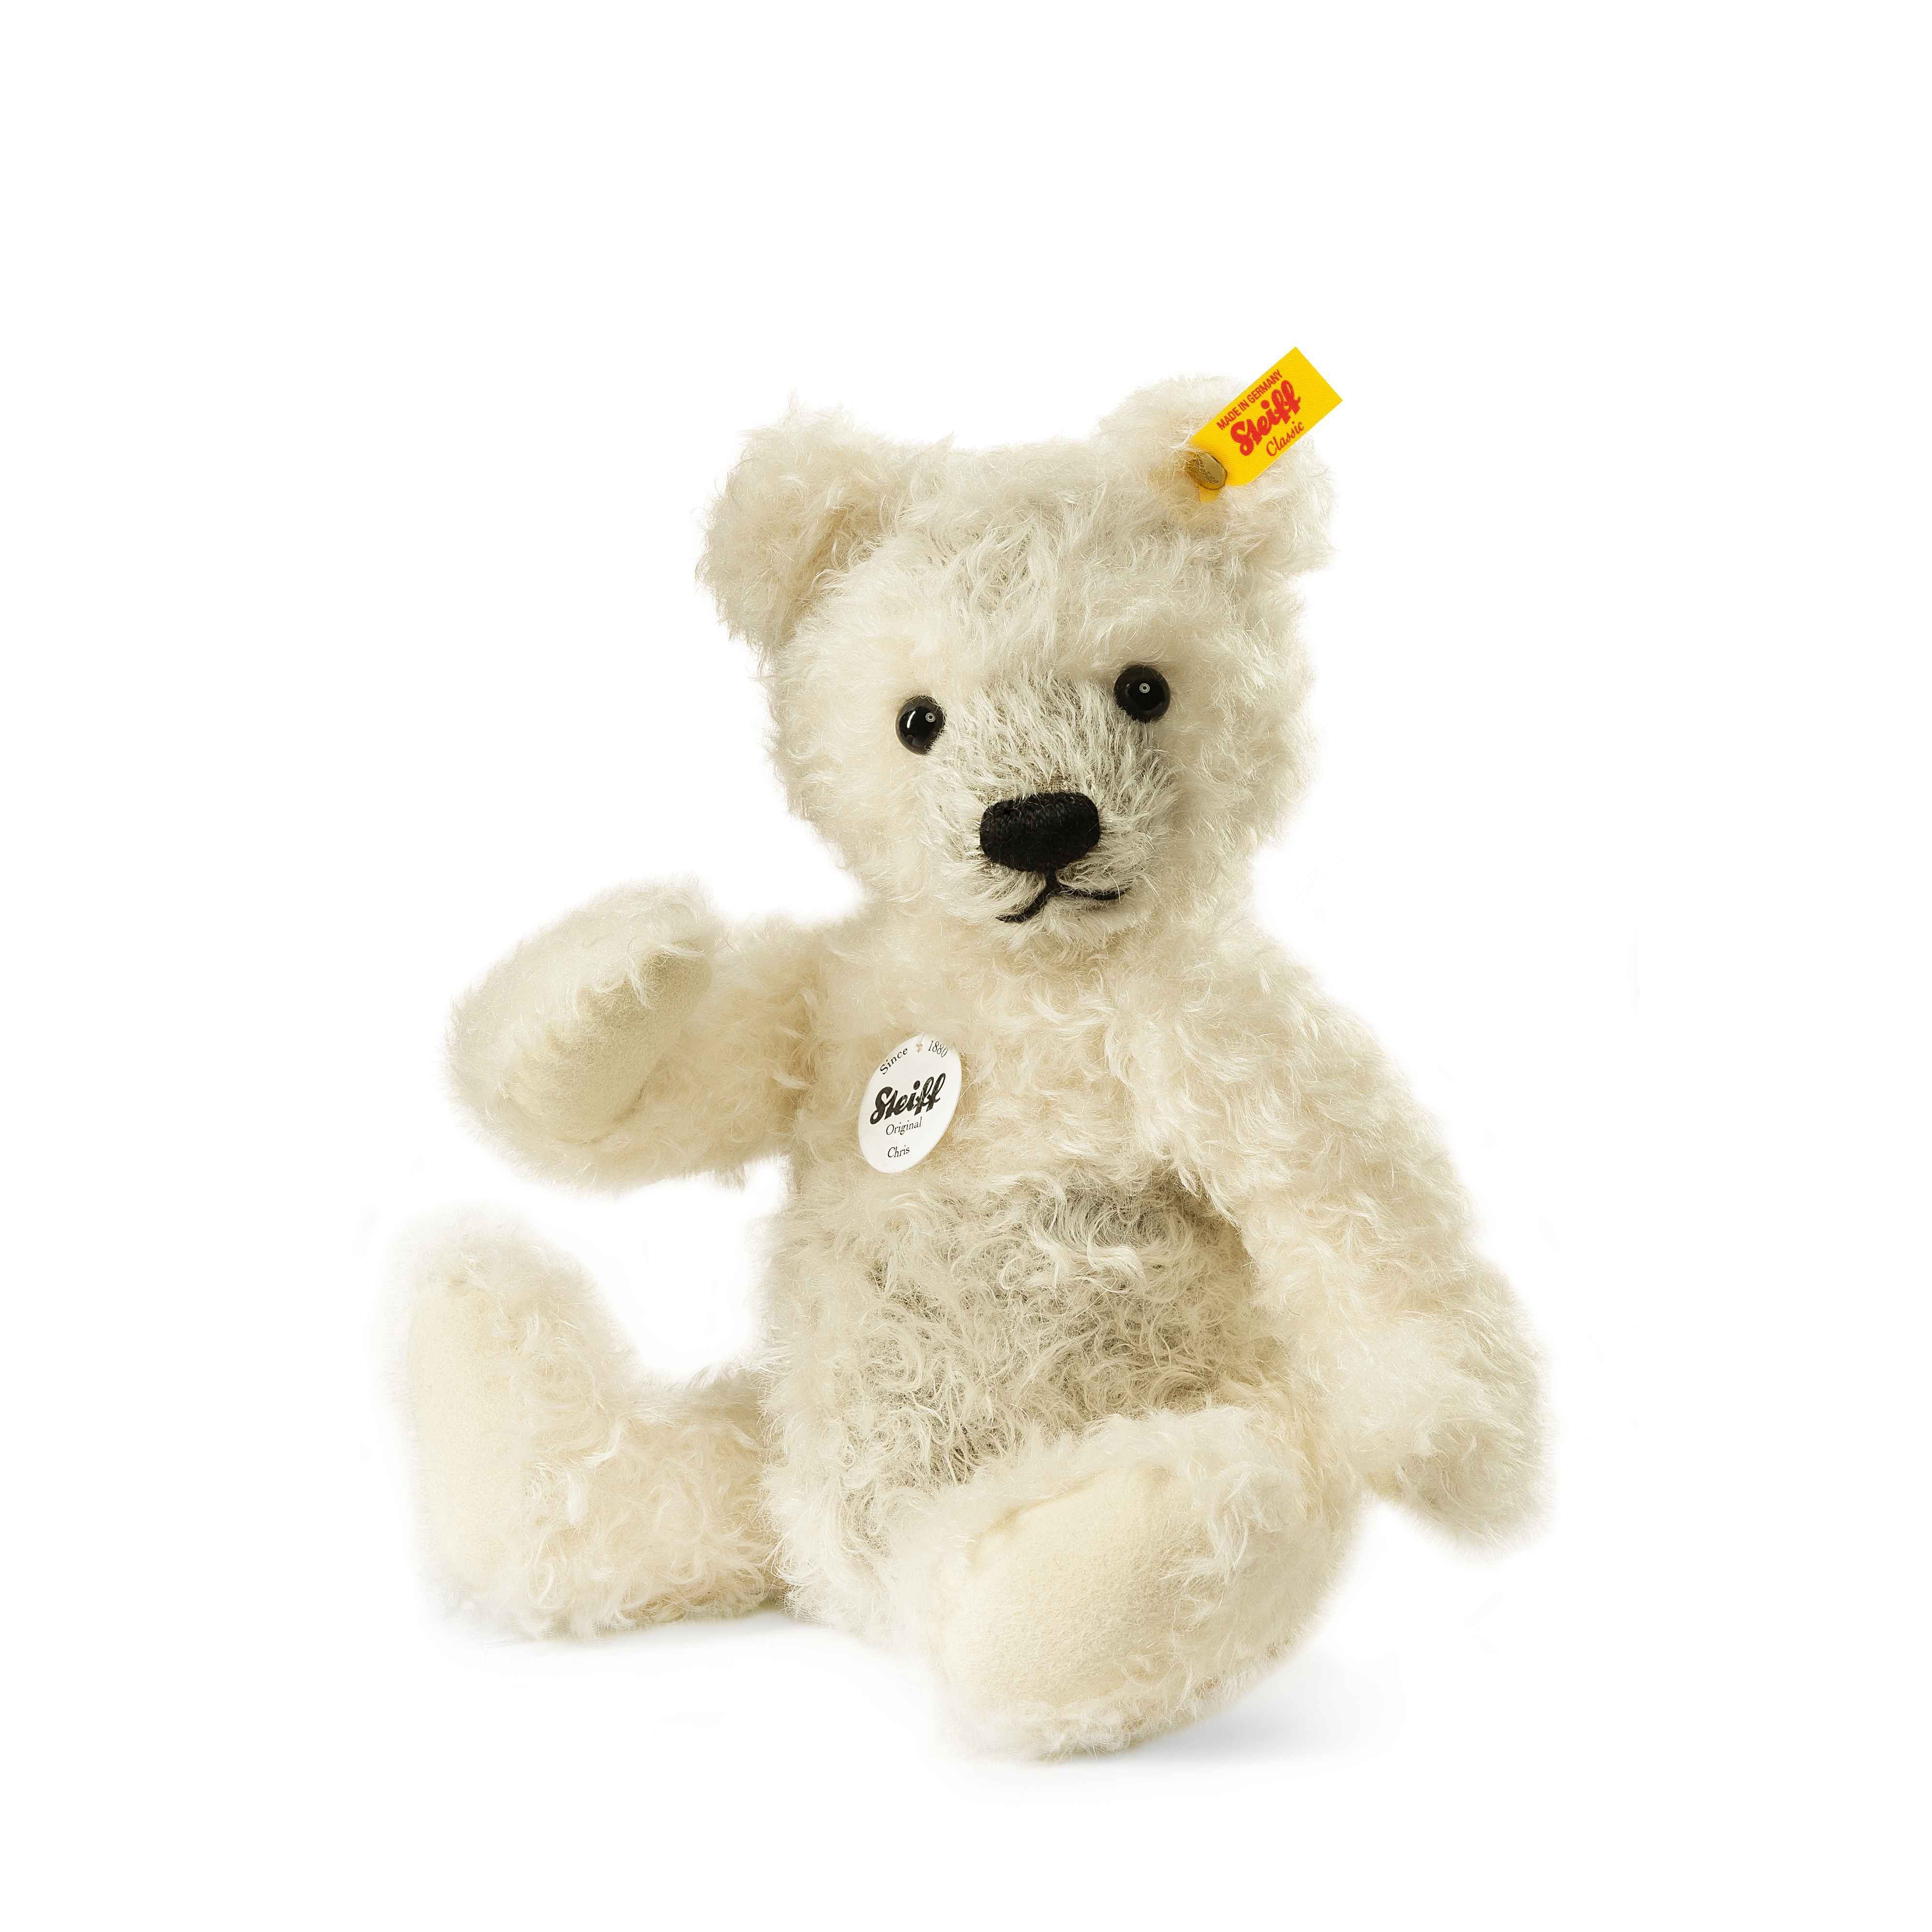 GUND Stitchie Classic Tan Teddy Bear Plush Stuffed Animal Toy Great ...